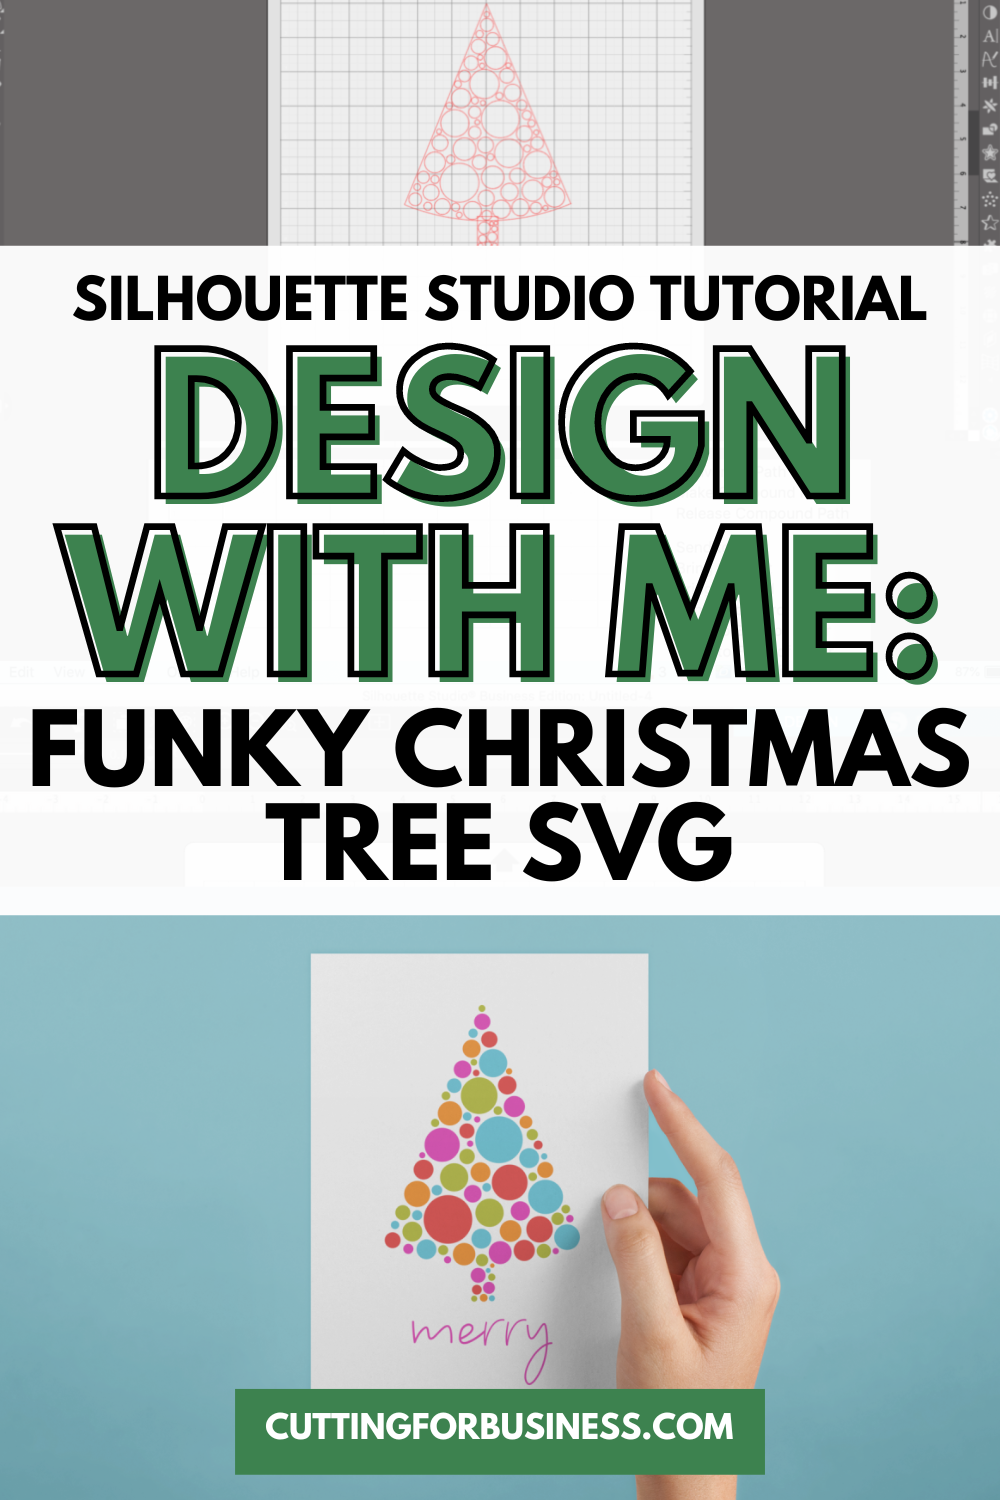 Silhouette Studio Tutorial: Funky Christmas Tree SVG - cuttingforbusiness.com